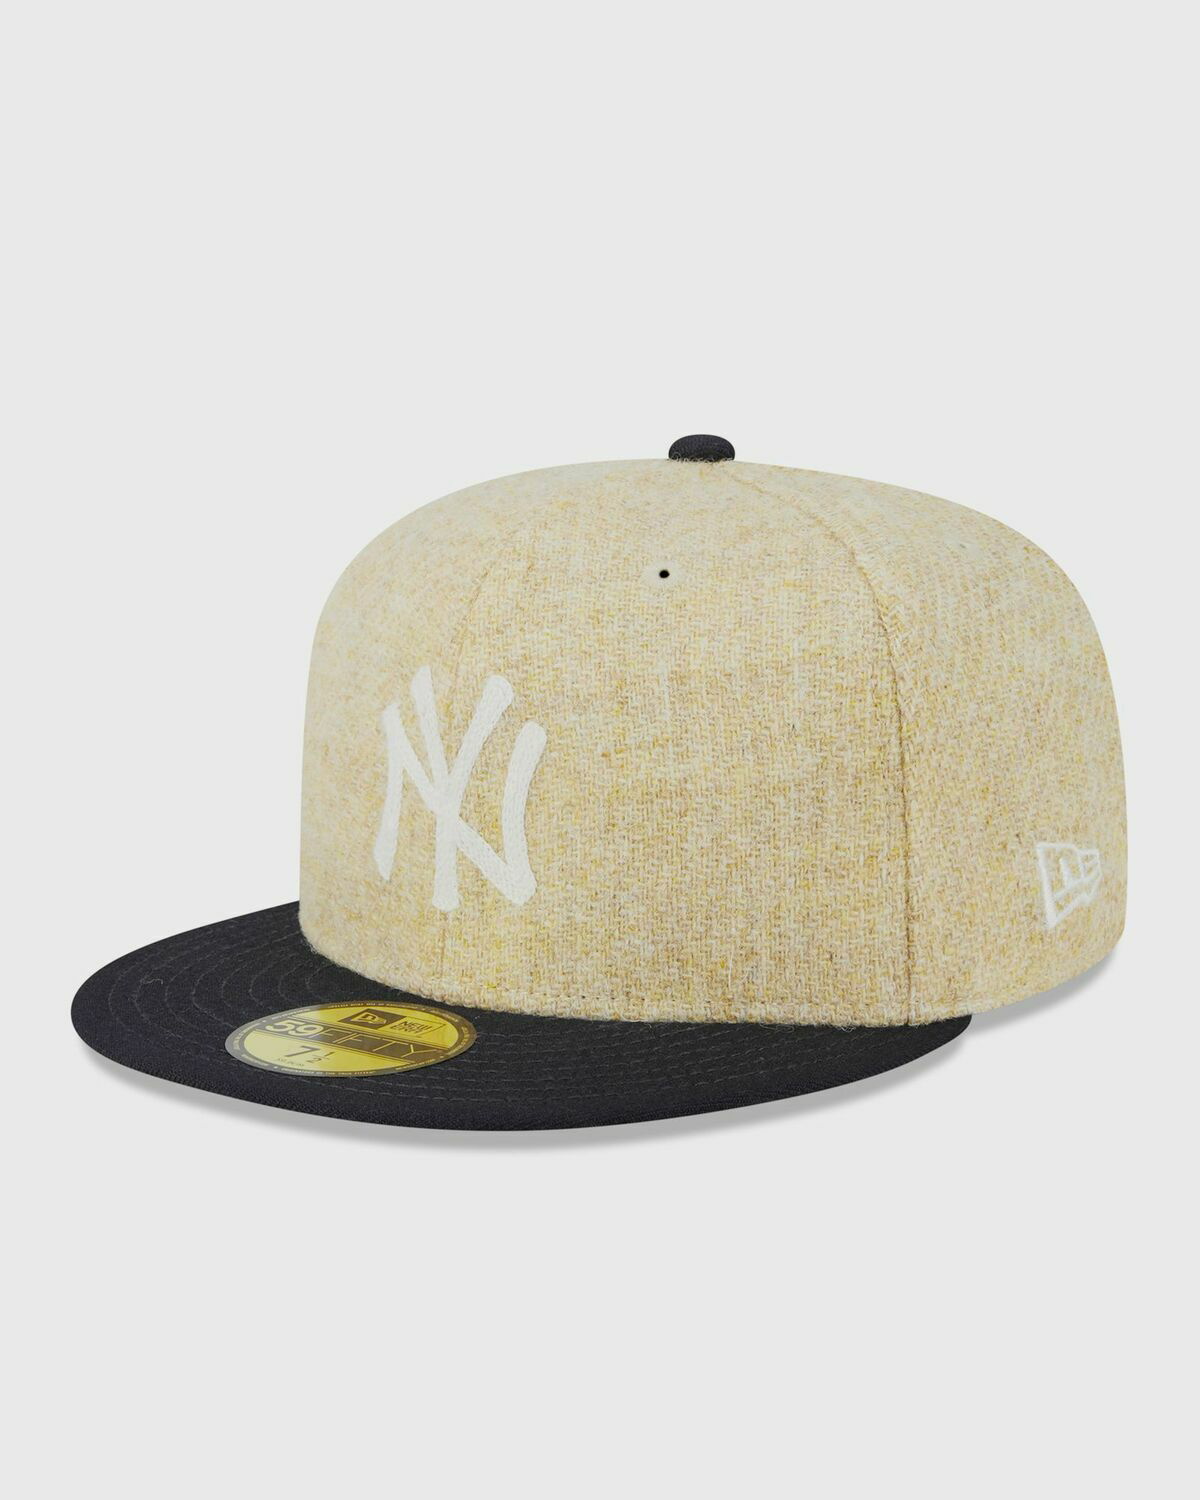 La casquette Yankees de New York 940, New Era